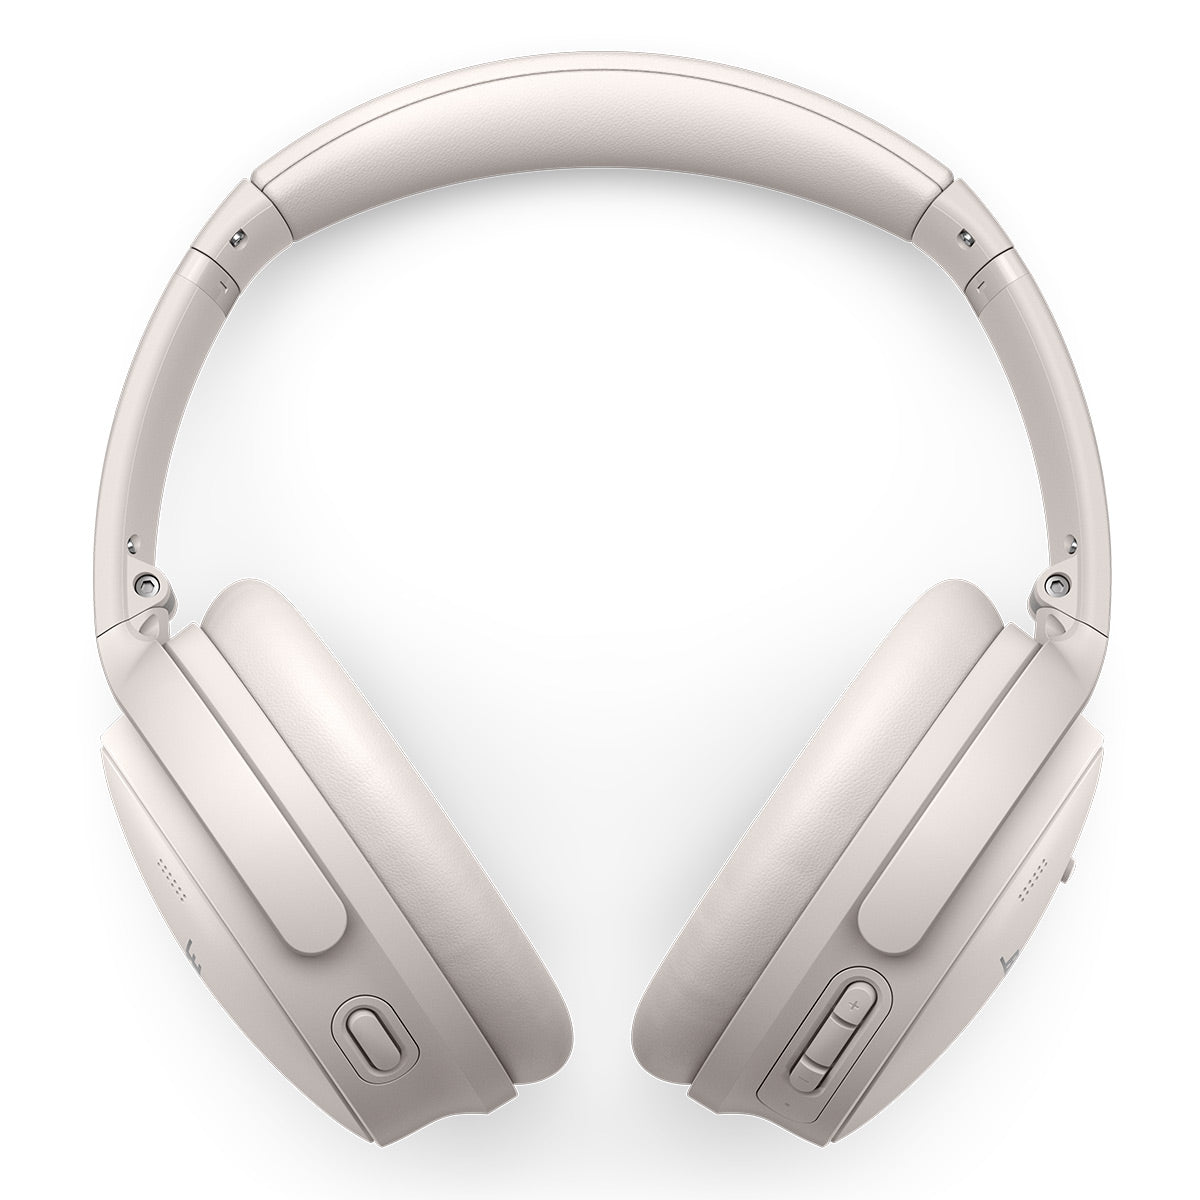 Bose Wireless Headphone Bundle with QuietComfort Ultra Wireless Noise Cancelling Headphones and QuietComfort Noise Cancelling Headphones (White)